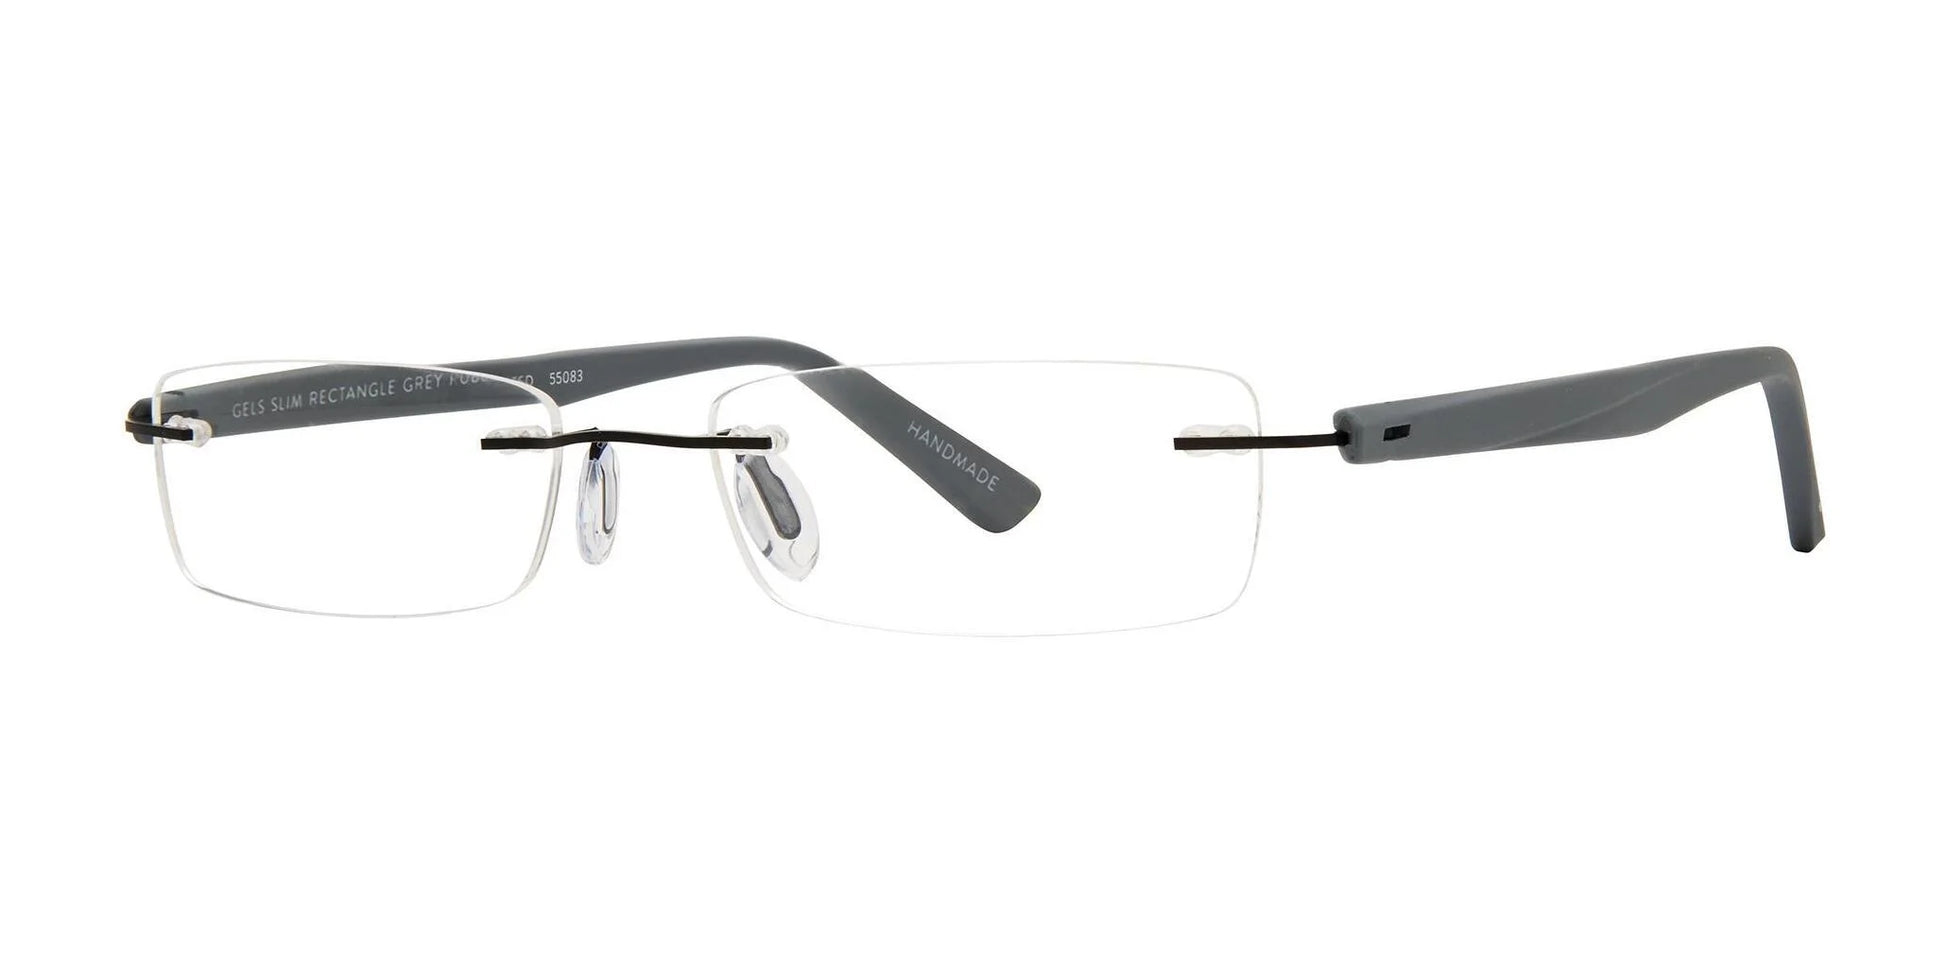 SCOJO SLIM RECTANGLE Eyeglasses Grey Rubber Coated